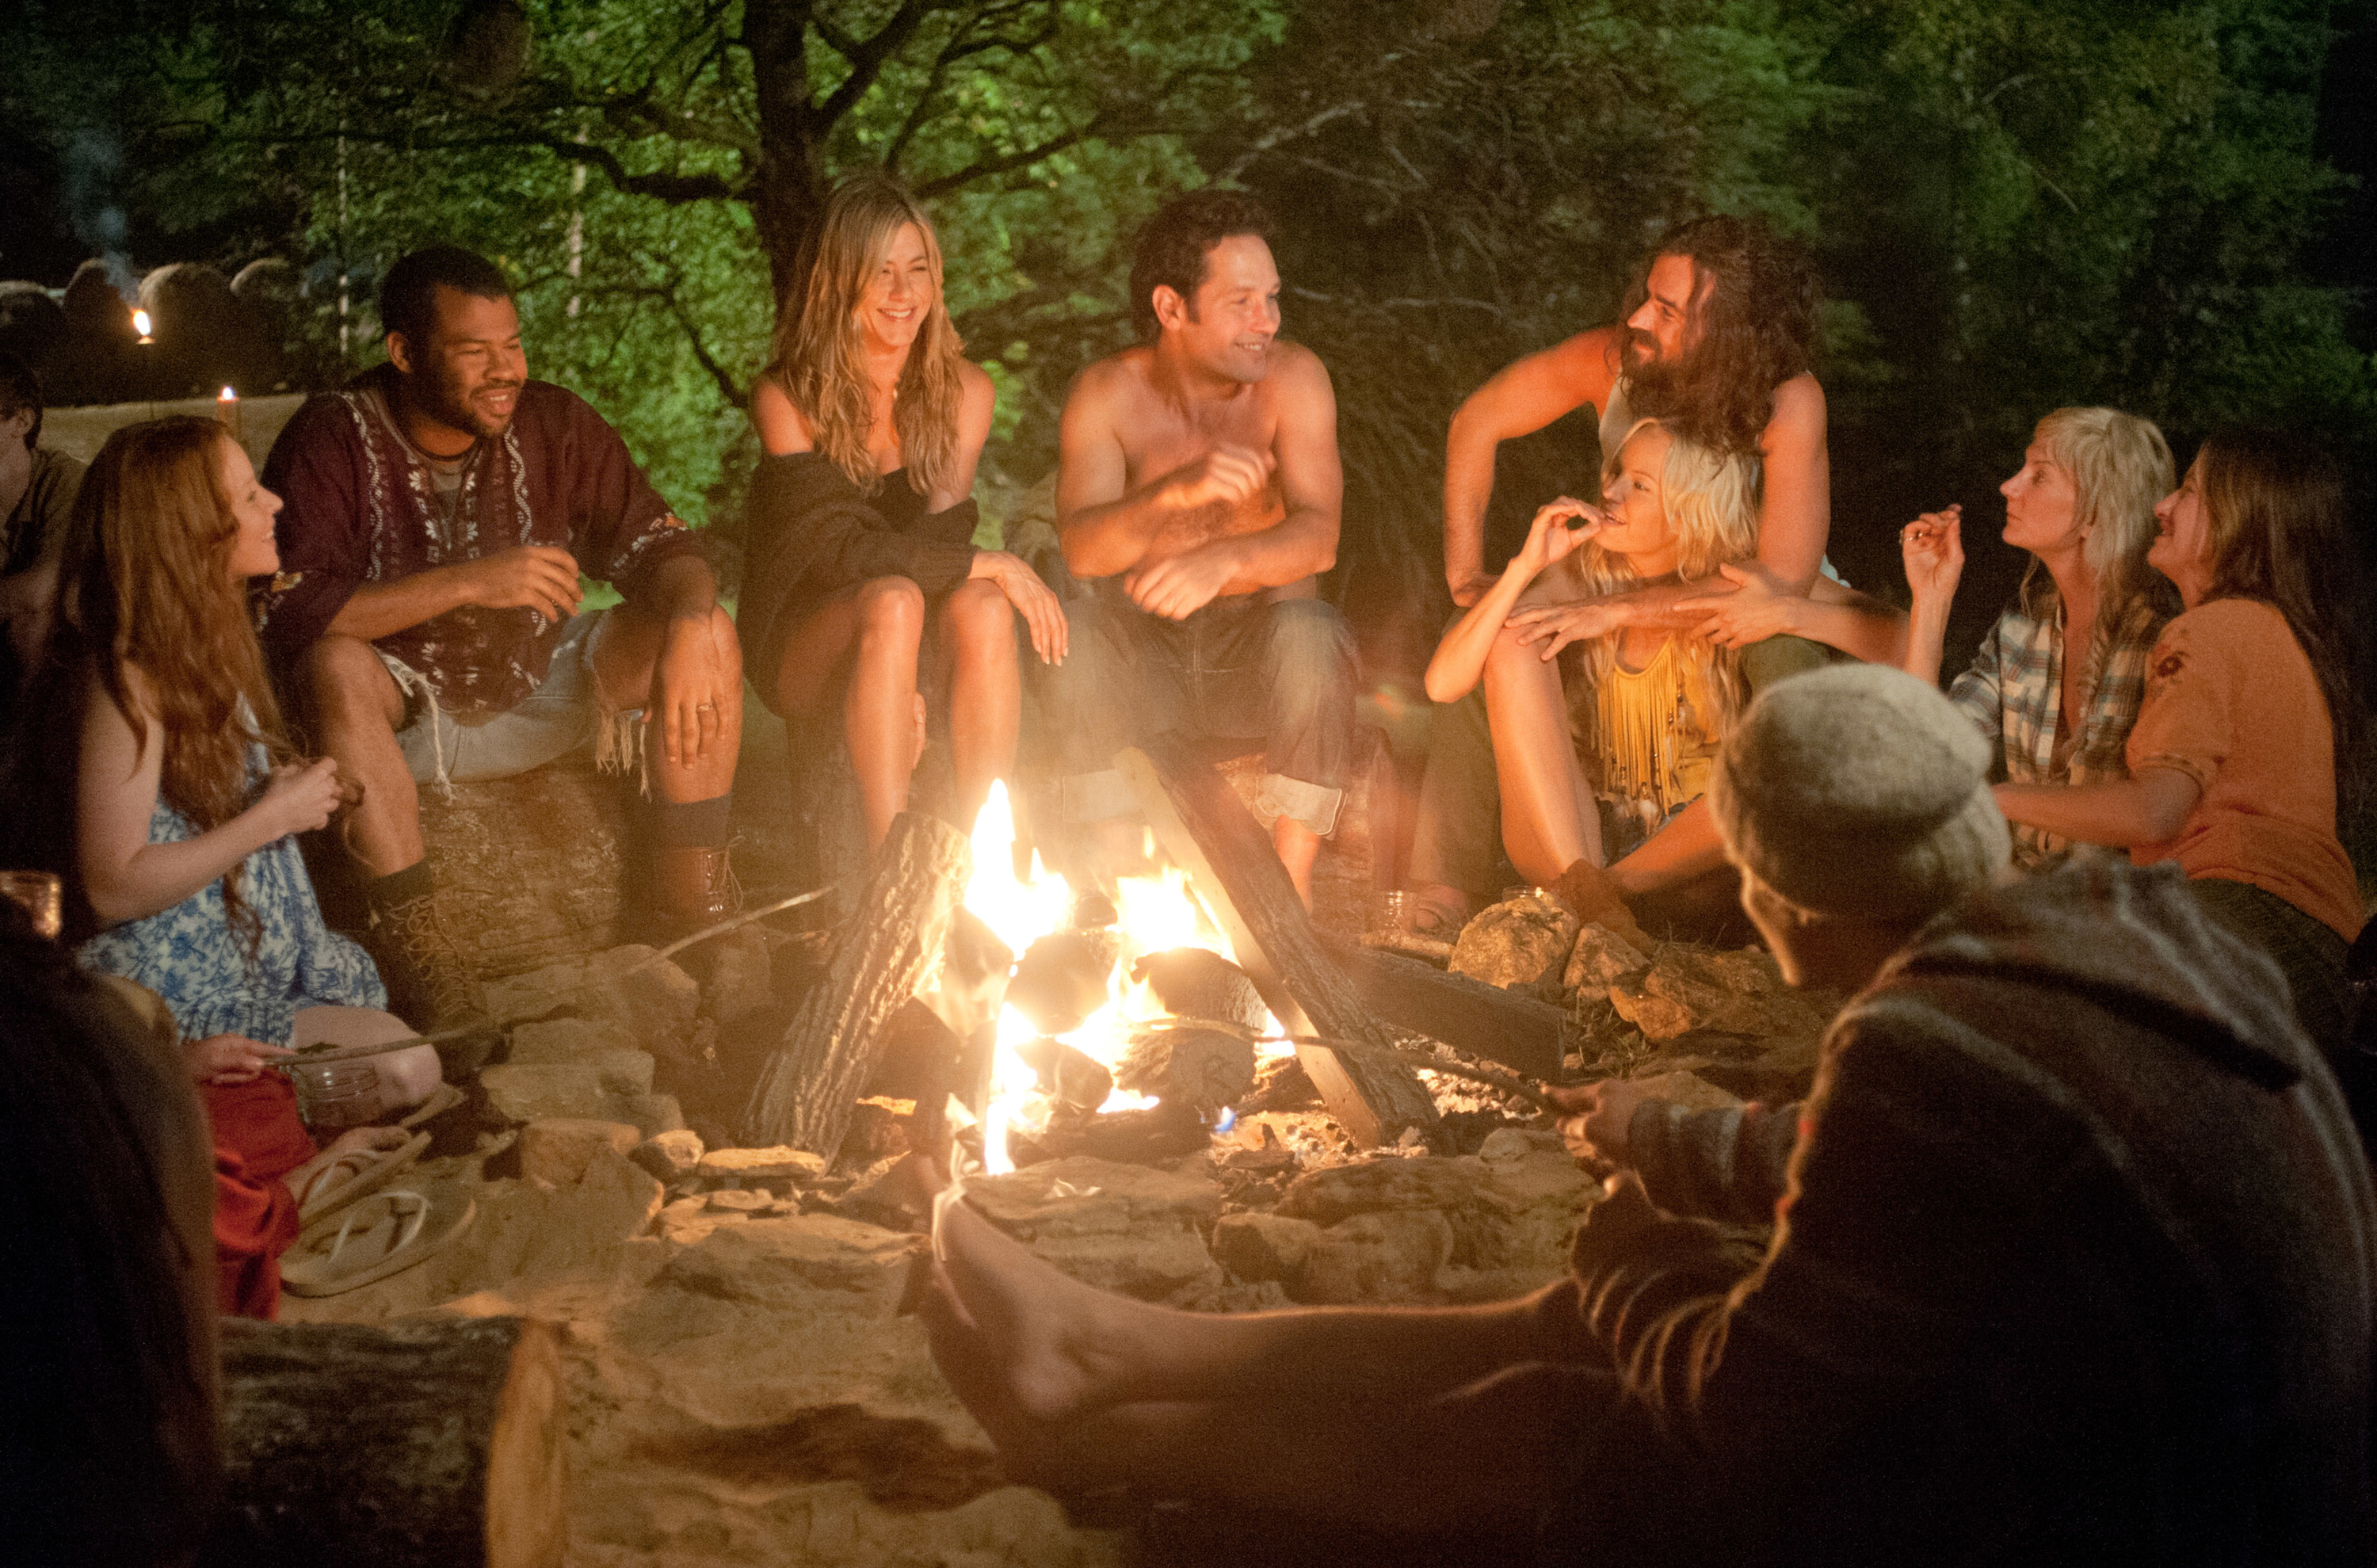 Jennifer Aniston and Paul Rudd sit around a campfire with Lauren Ambrose, Jordan Peele, Justin Theroux, Malin Akerman, Kerri Kenney, and Kathryn Hahn